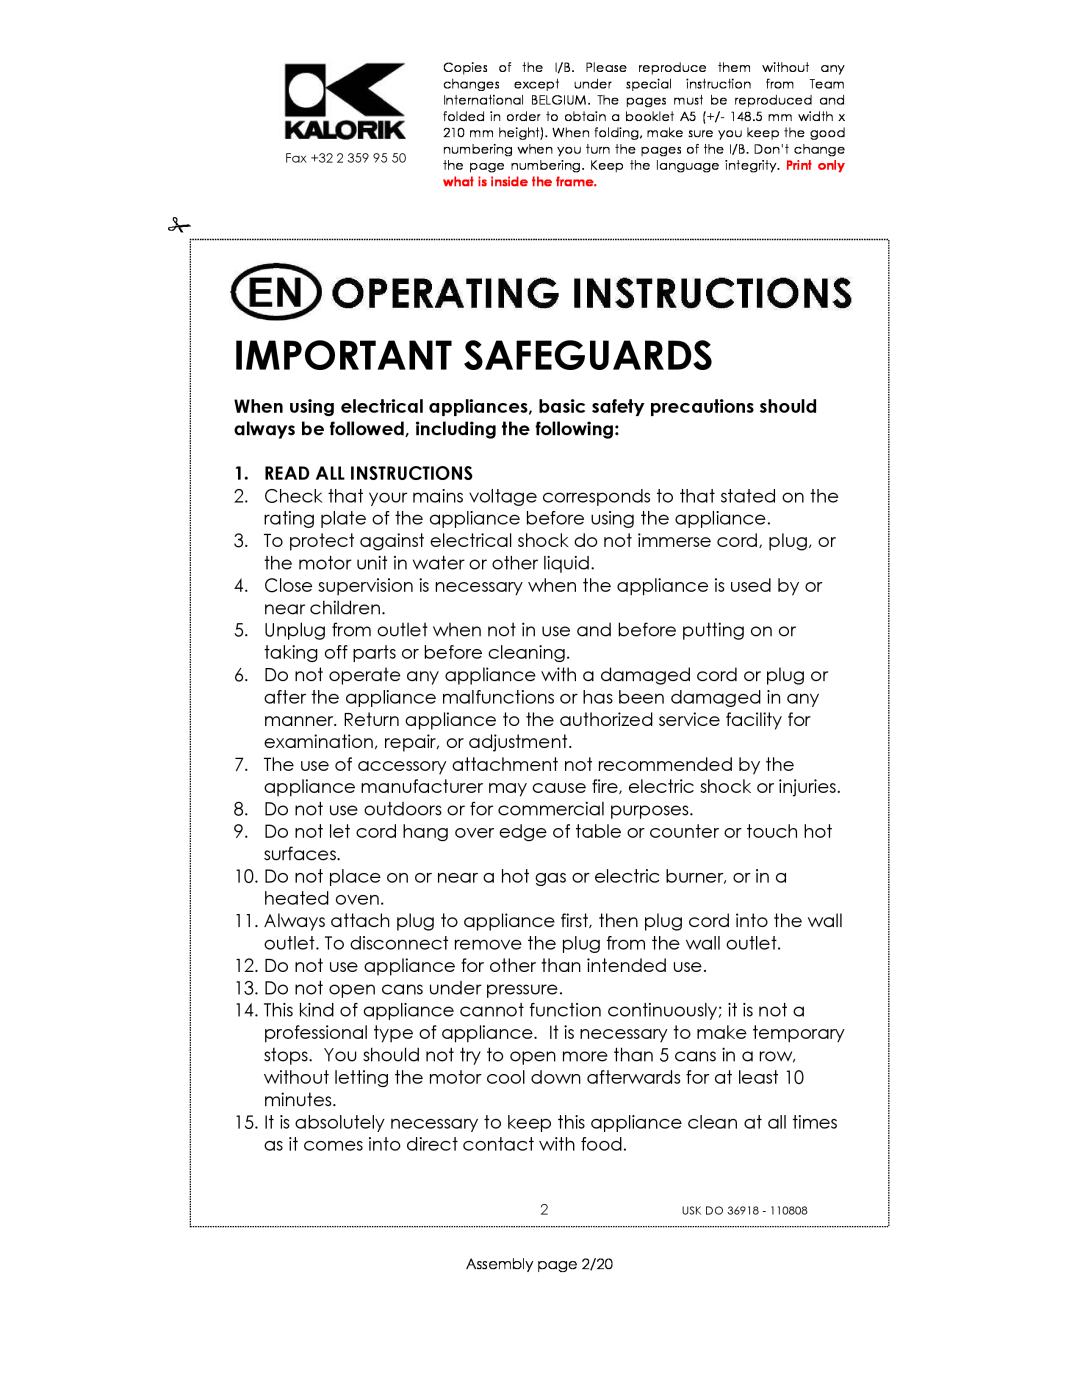 Kalorik USK DO 36918 manual Important Safeguards, Read All Instructions 